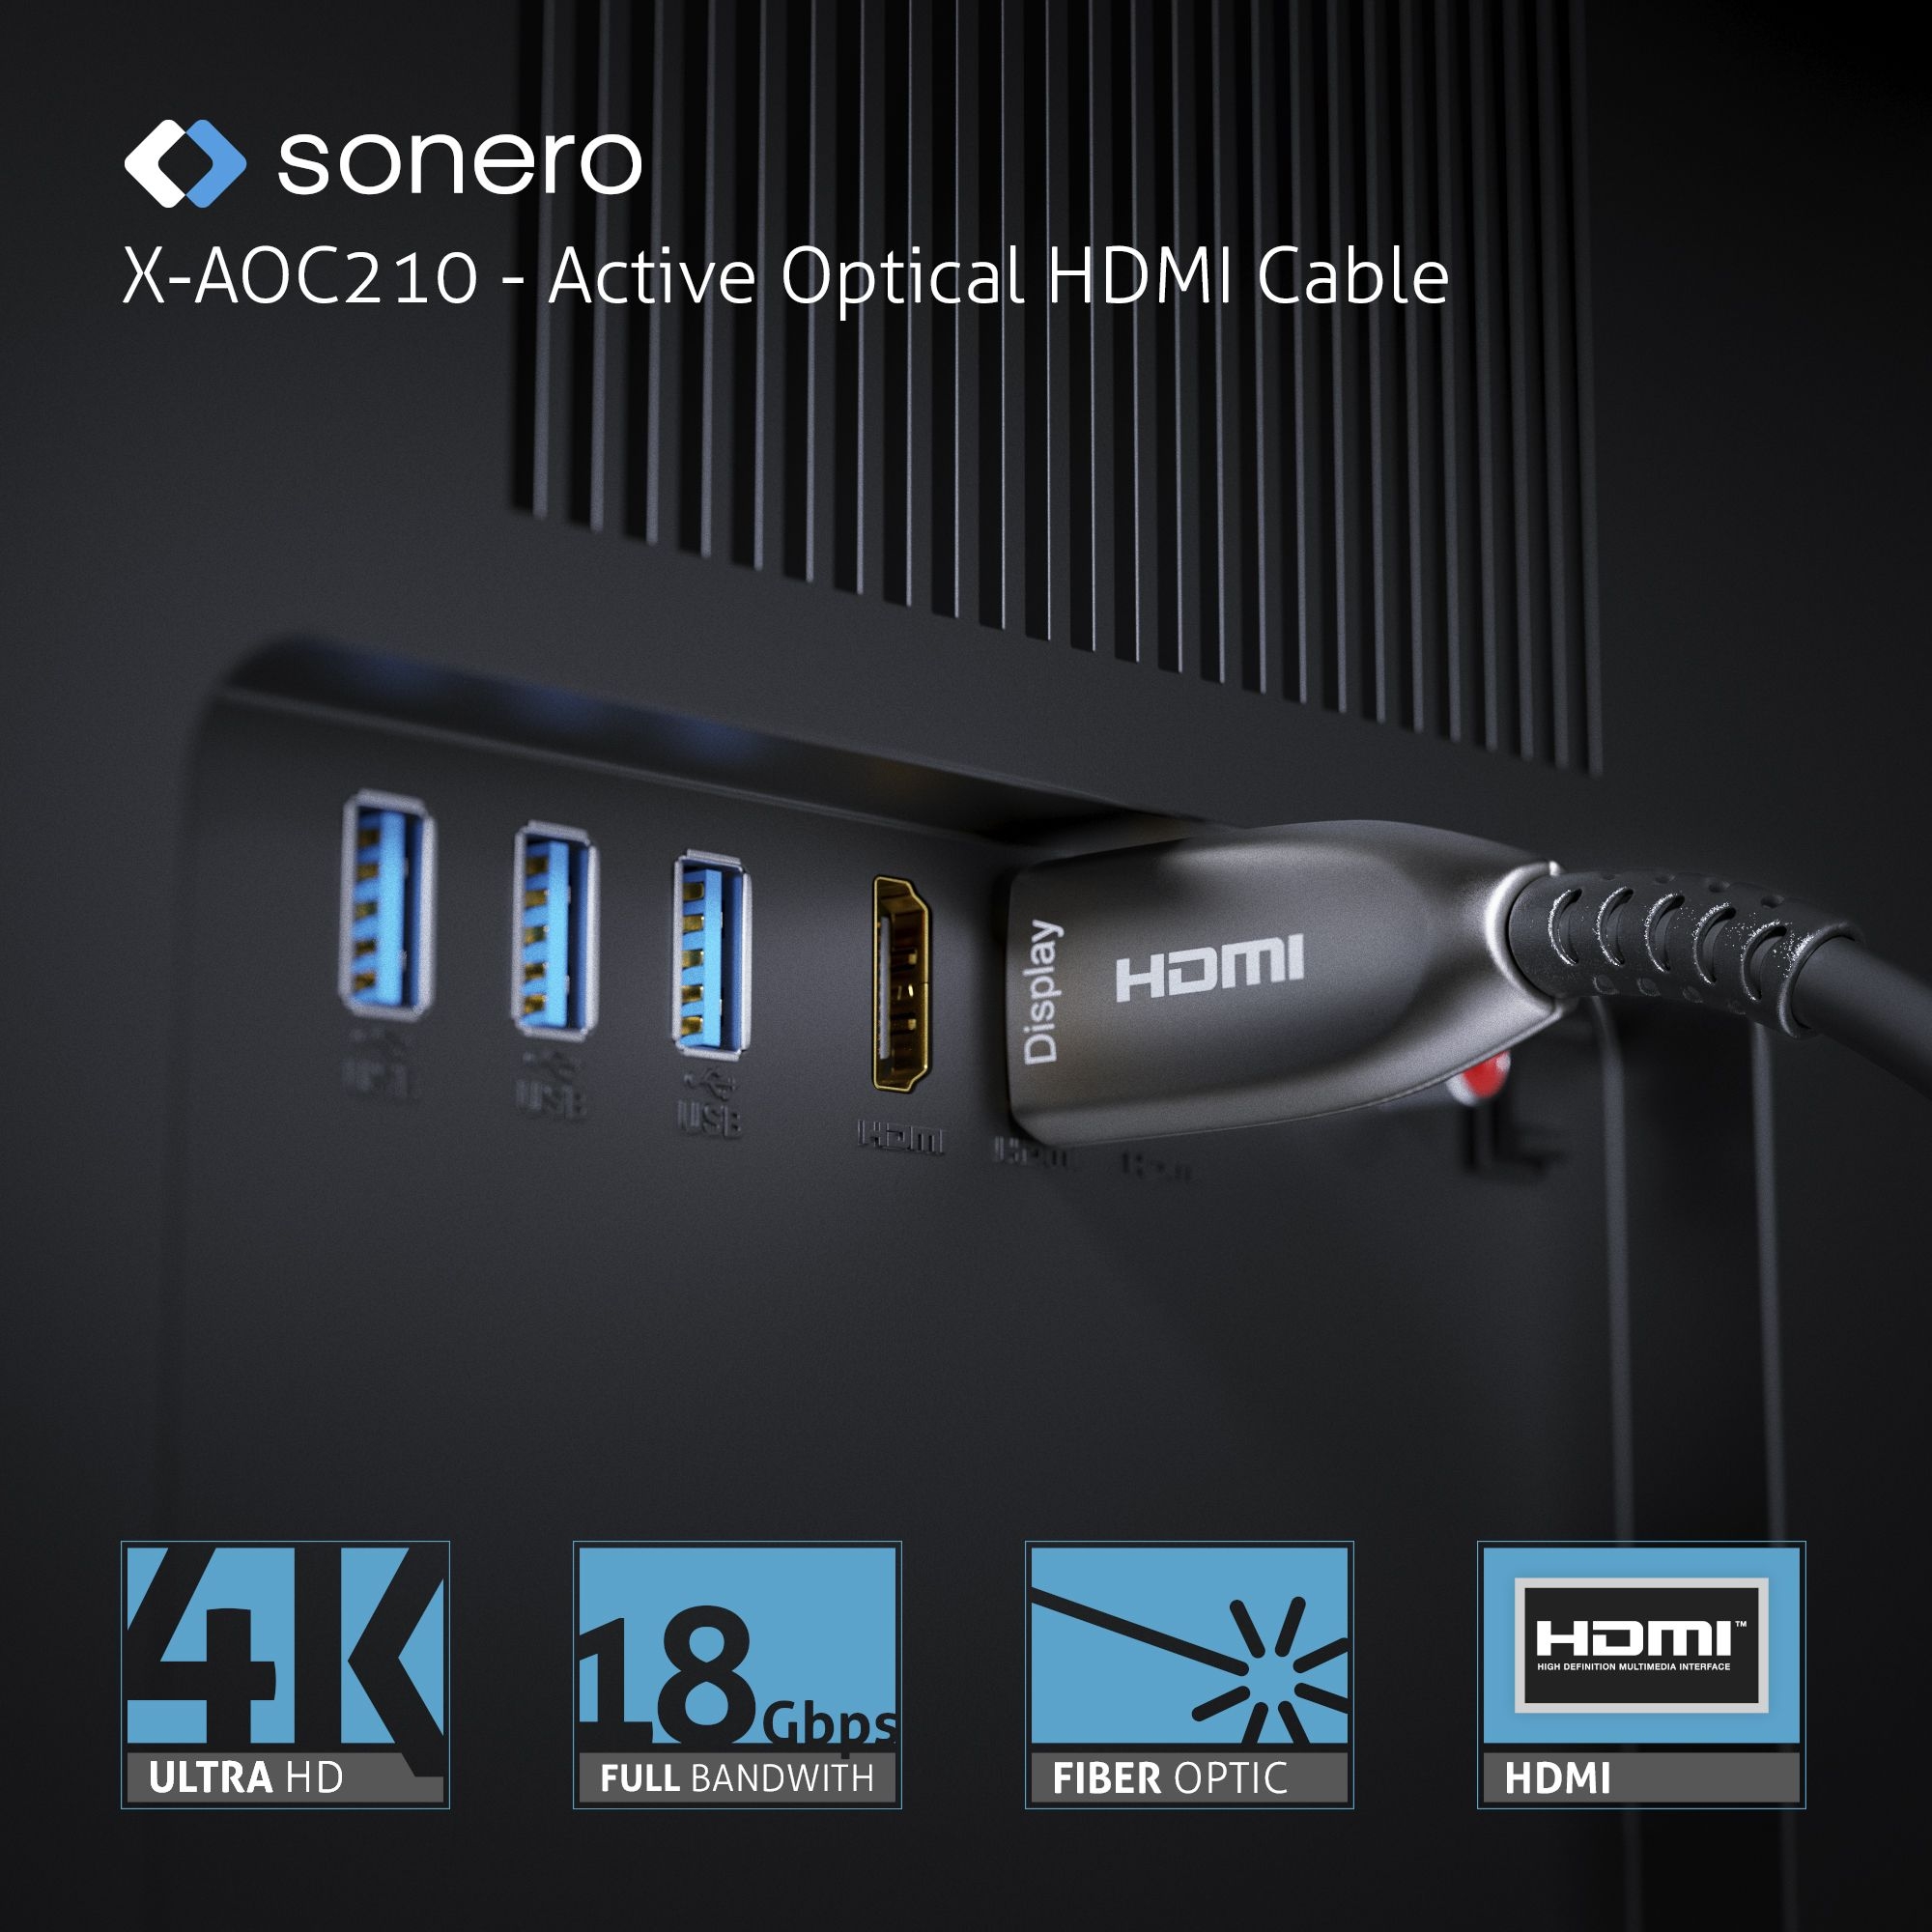 Sonero X-AOC210-150 - HDMI 4K fibre optic cable - 18 Gbps - 15.0m - Black